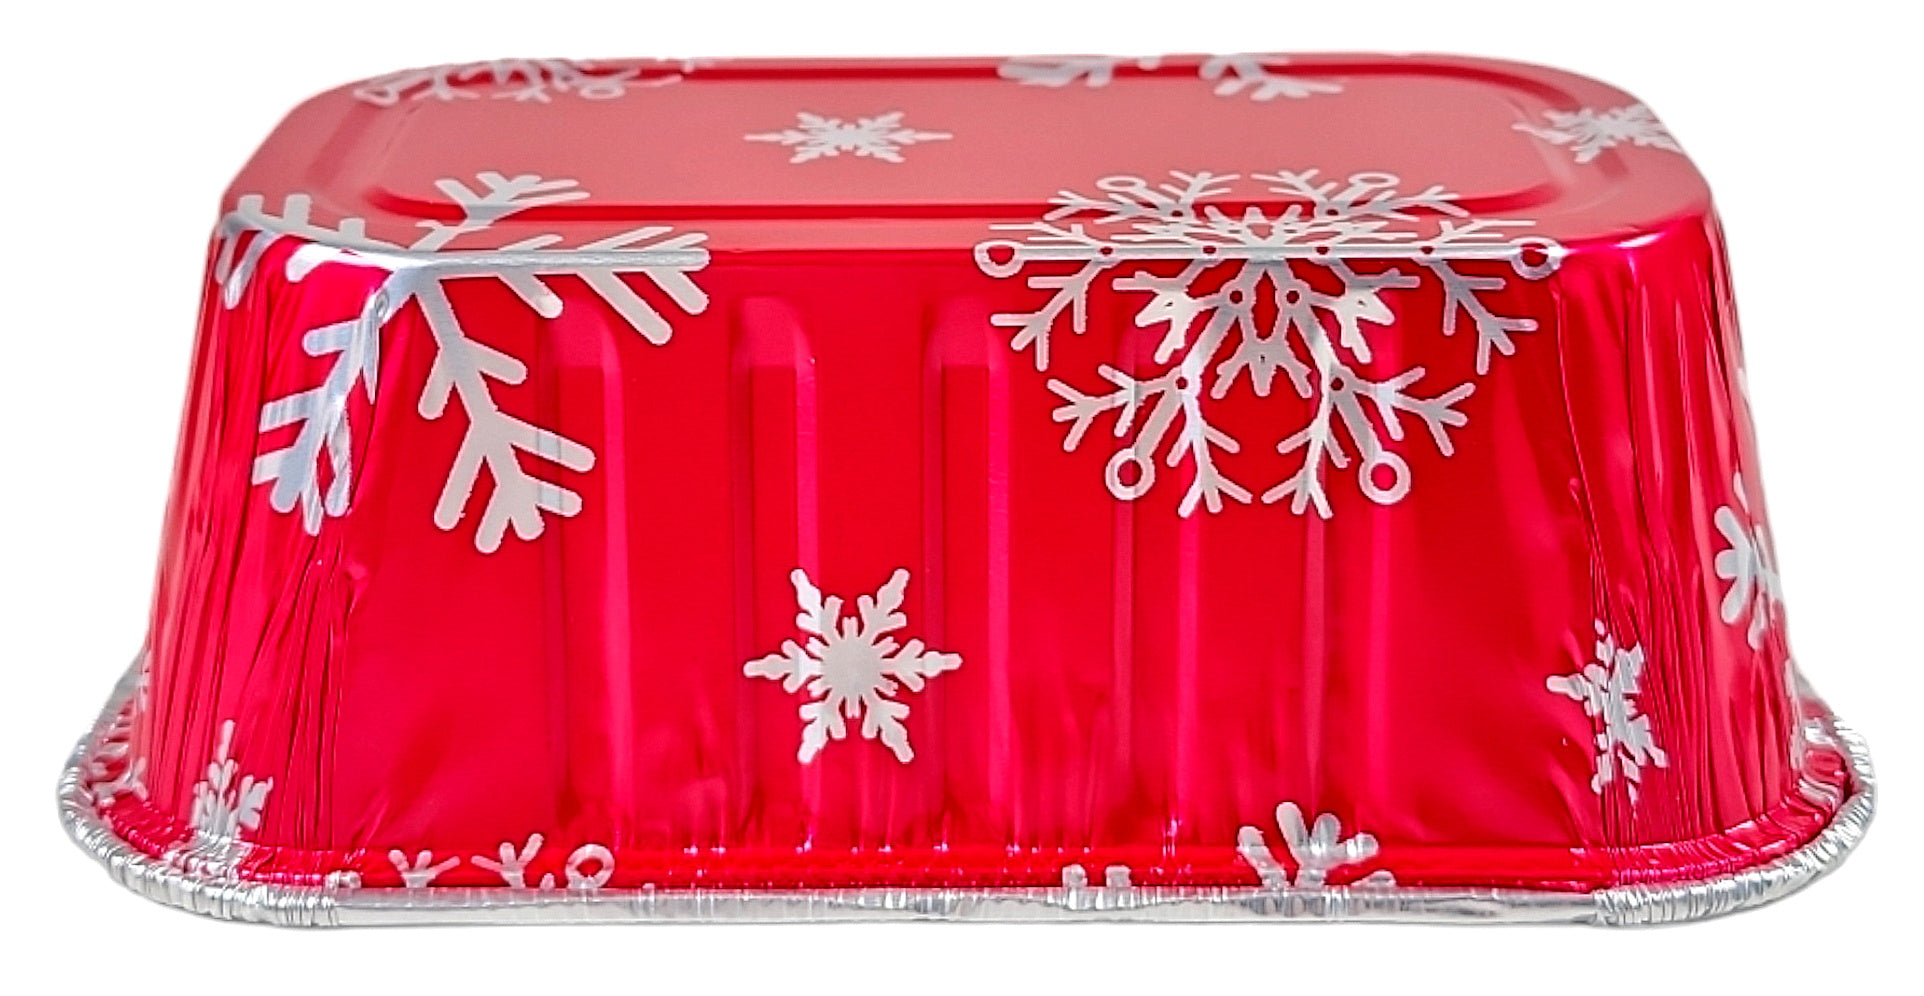 Handi-Foil 2 lb. Red Holiday Snowman Loaf Bread Pan (NO LIDS) 50